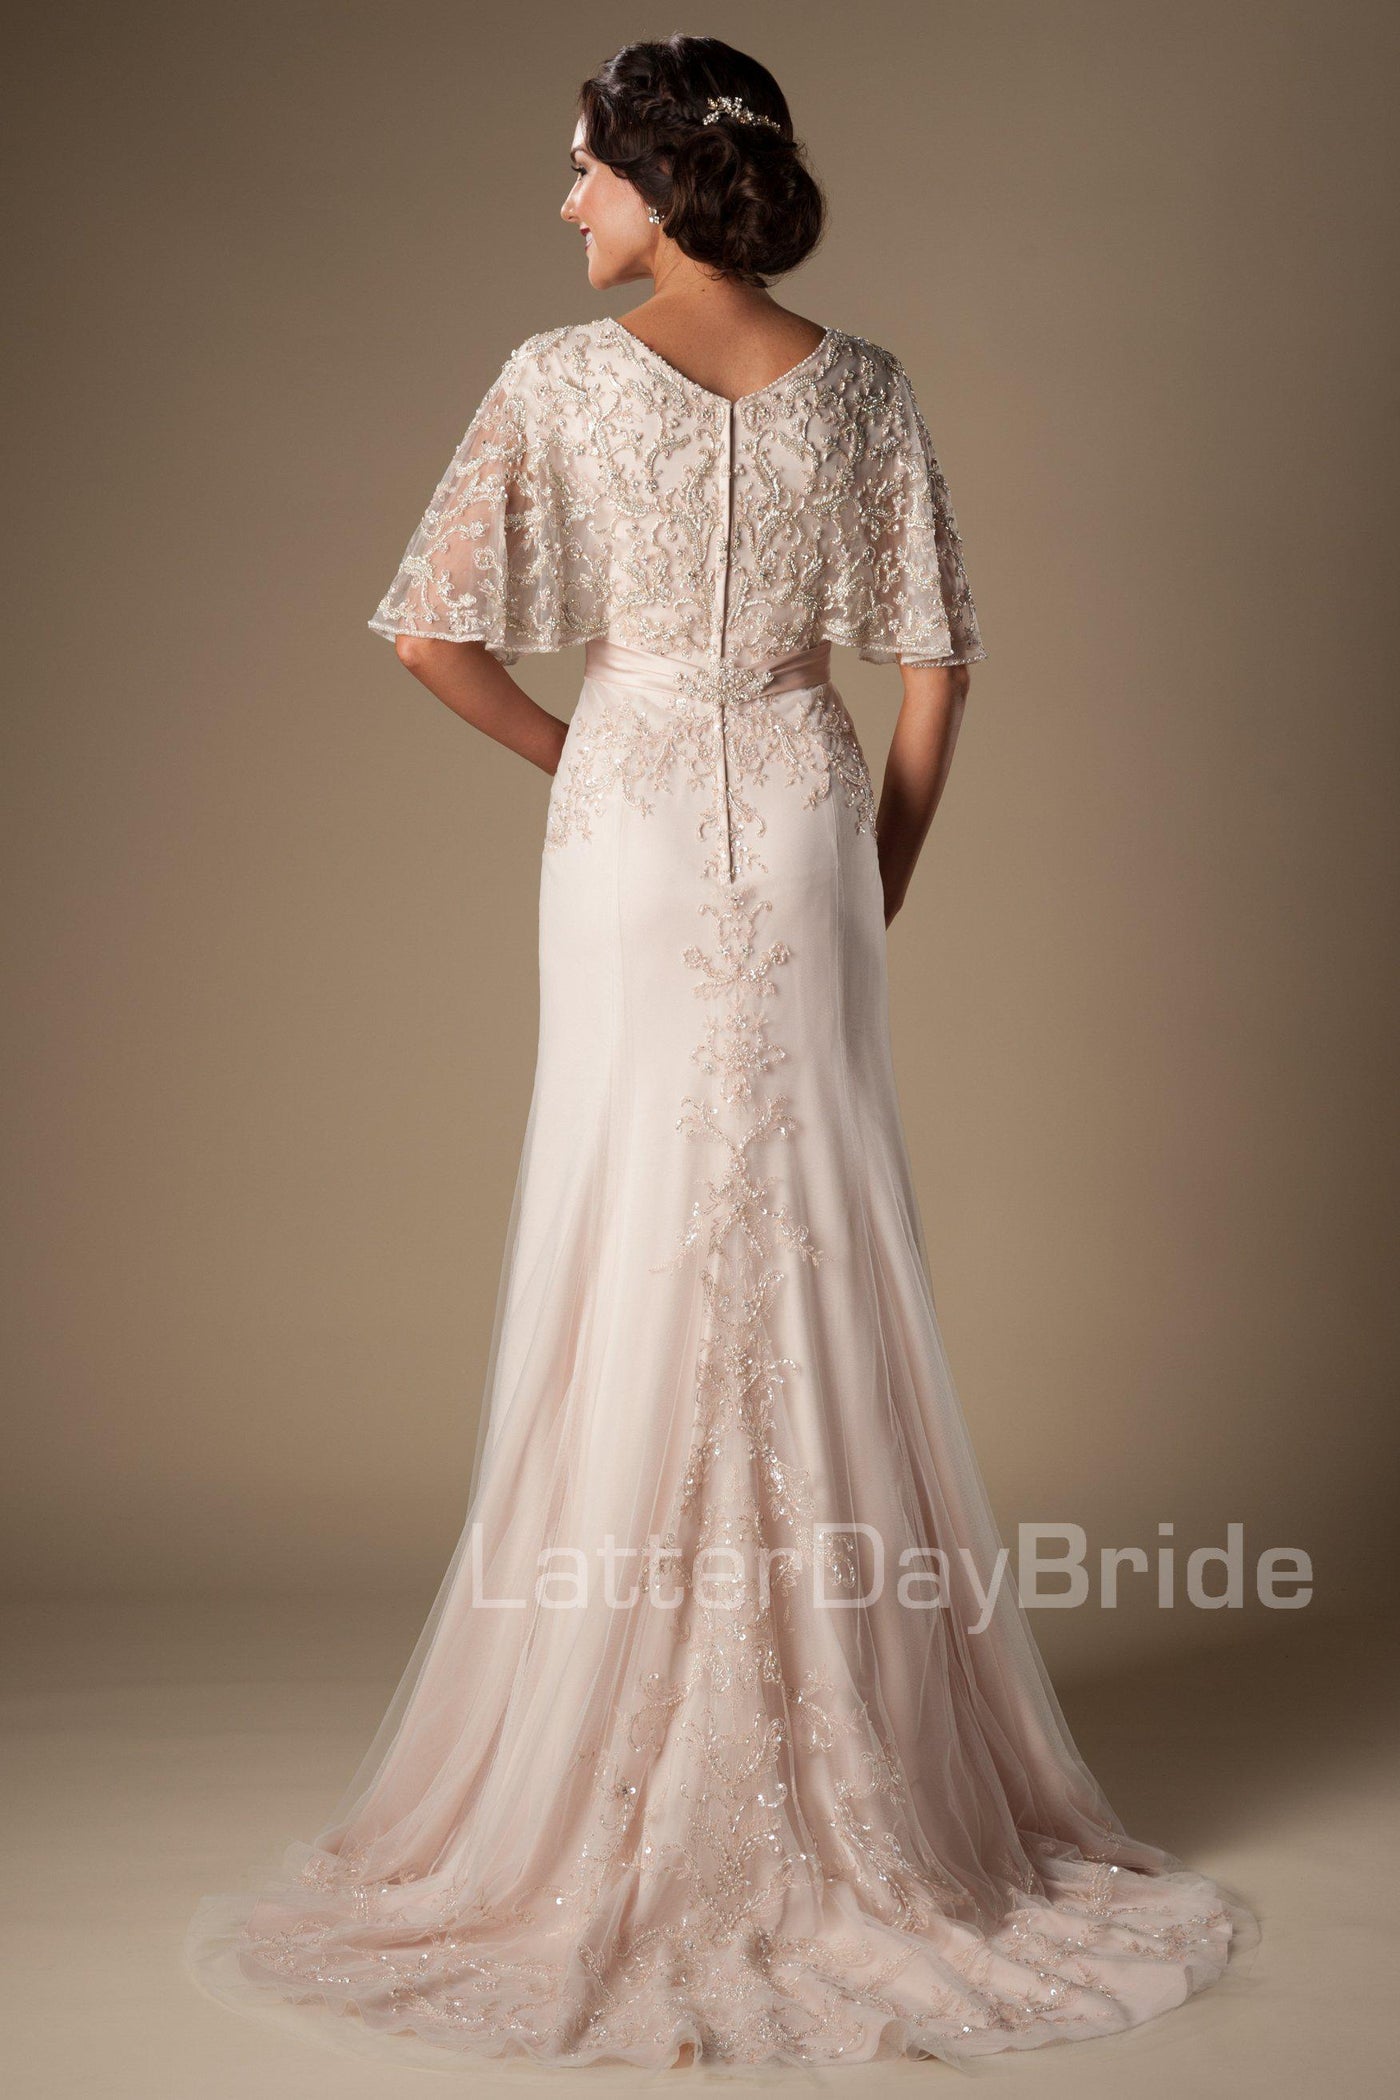 Fabulous v-neck sheath wedding dress, style Primrose, is part of the Wedding Collection of LatterDayBride, a Salt Lake City bridal store.